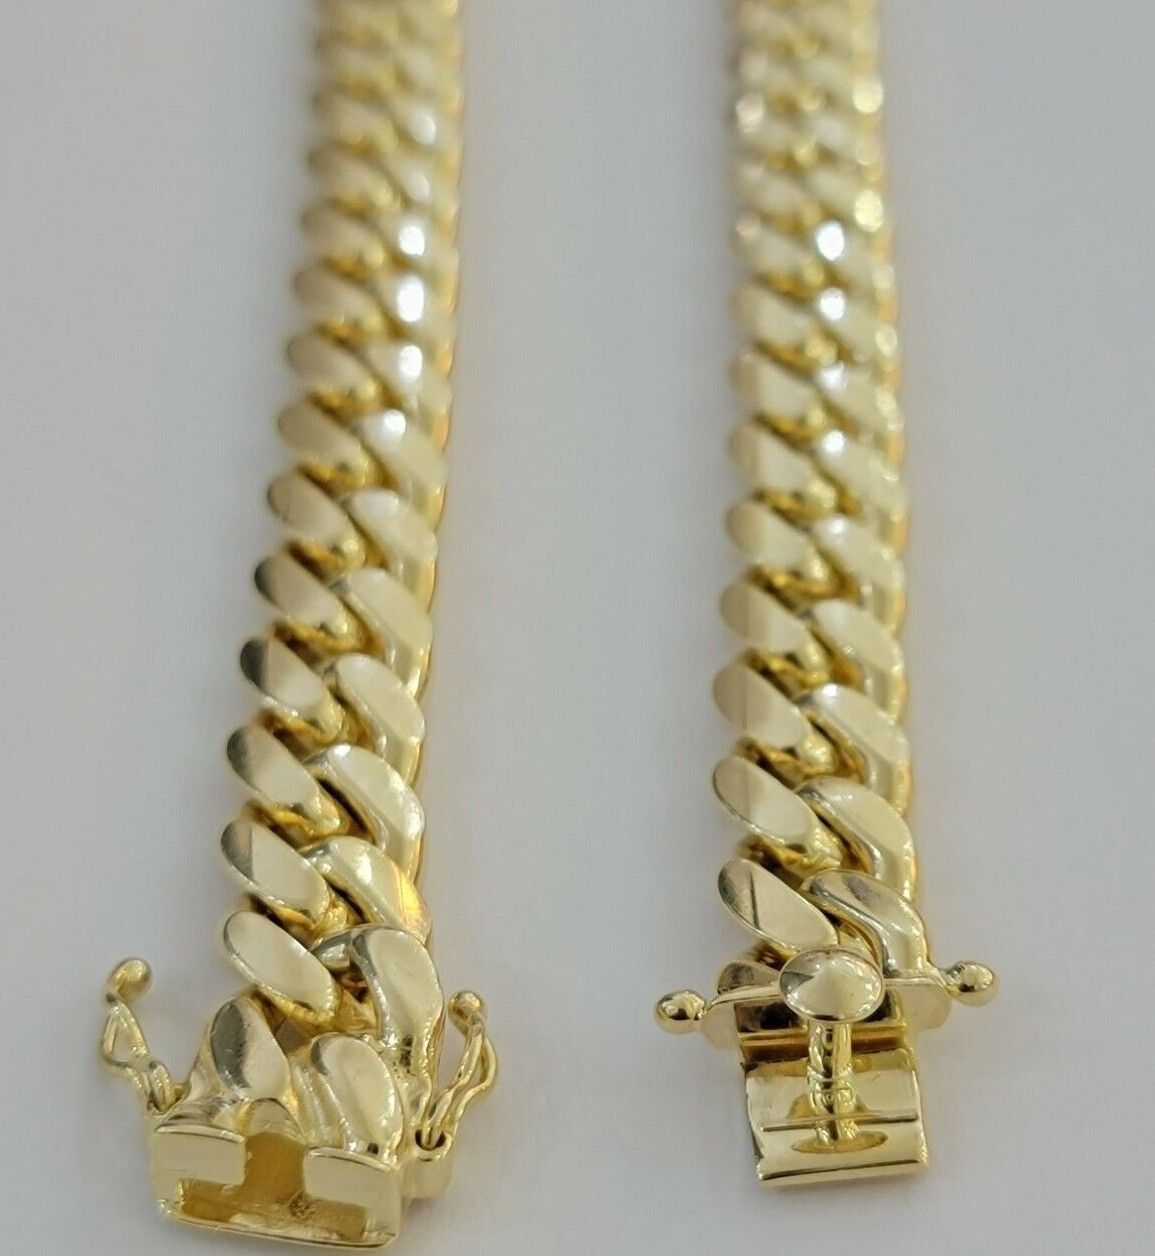 11mm Enamel Cuban Link Necklace Chain